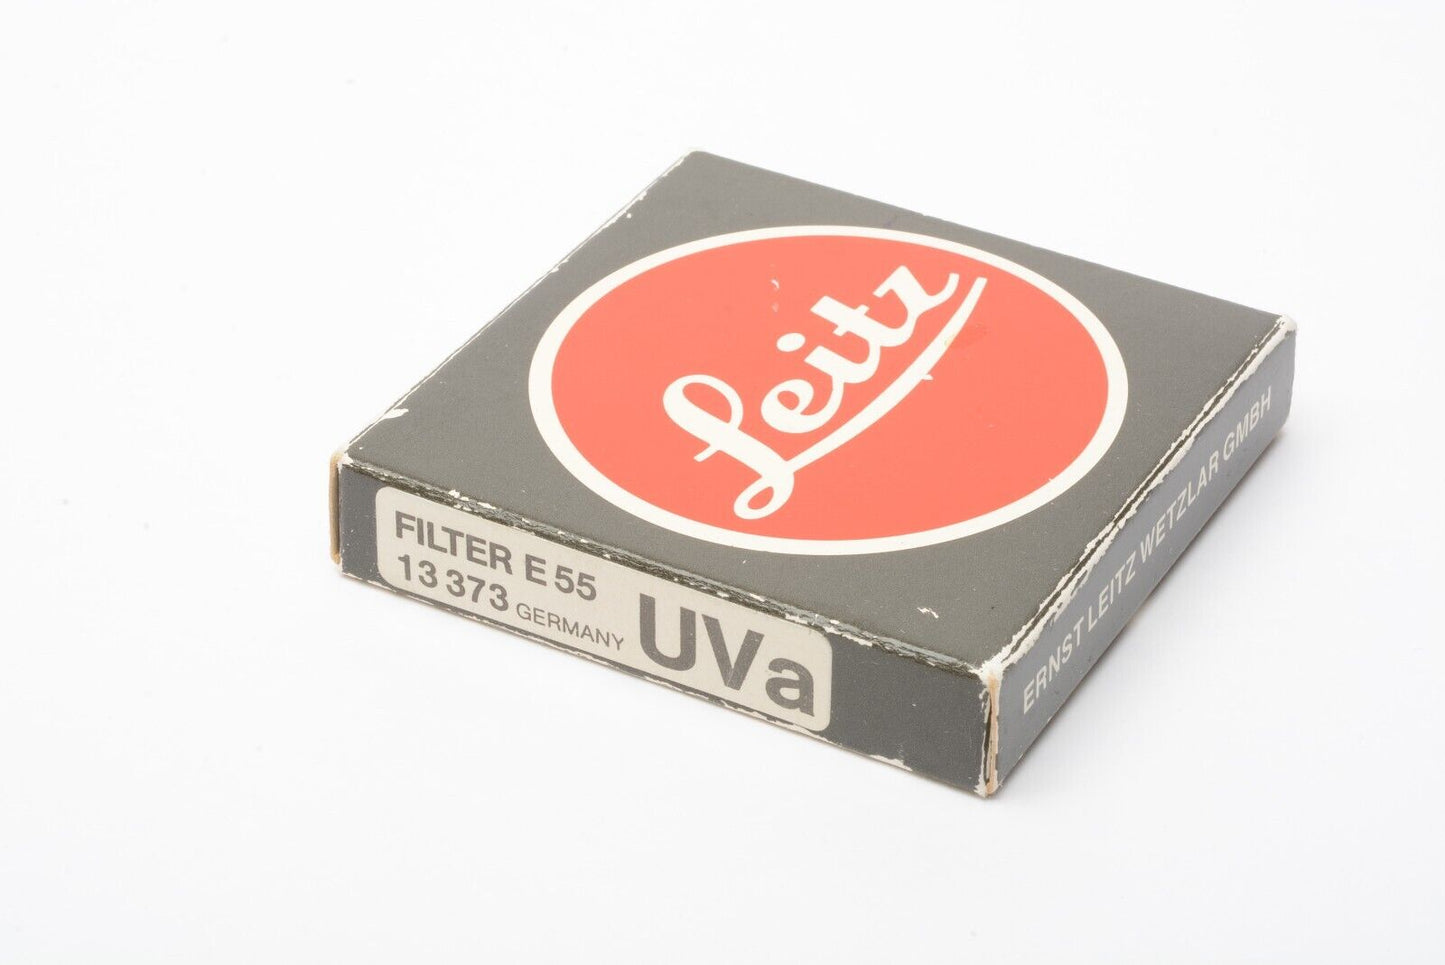 Leica 55mm UVa Filter #13373, Never Used